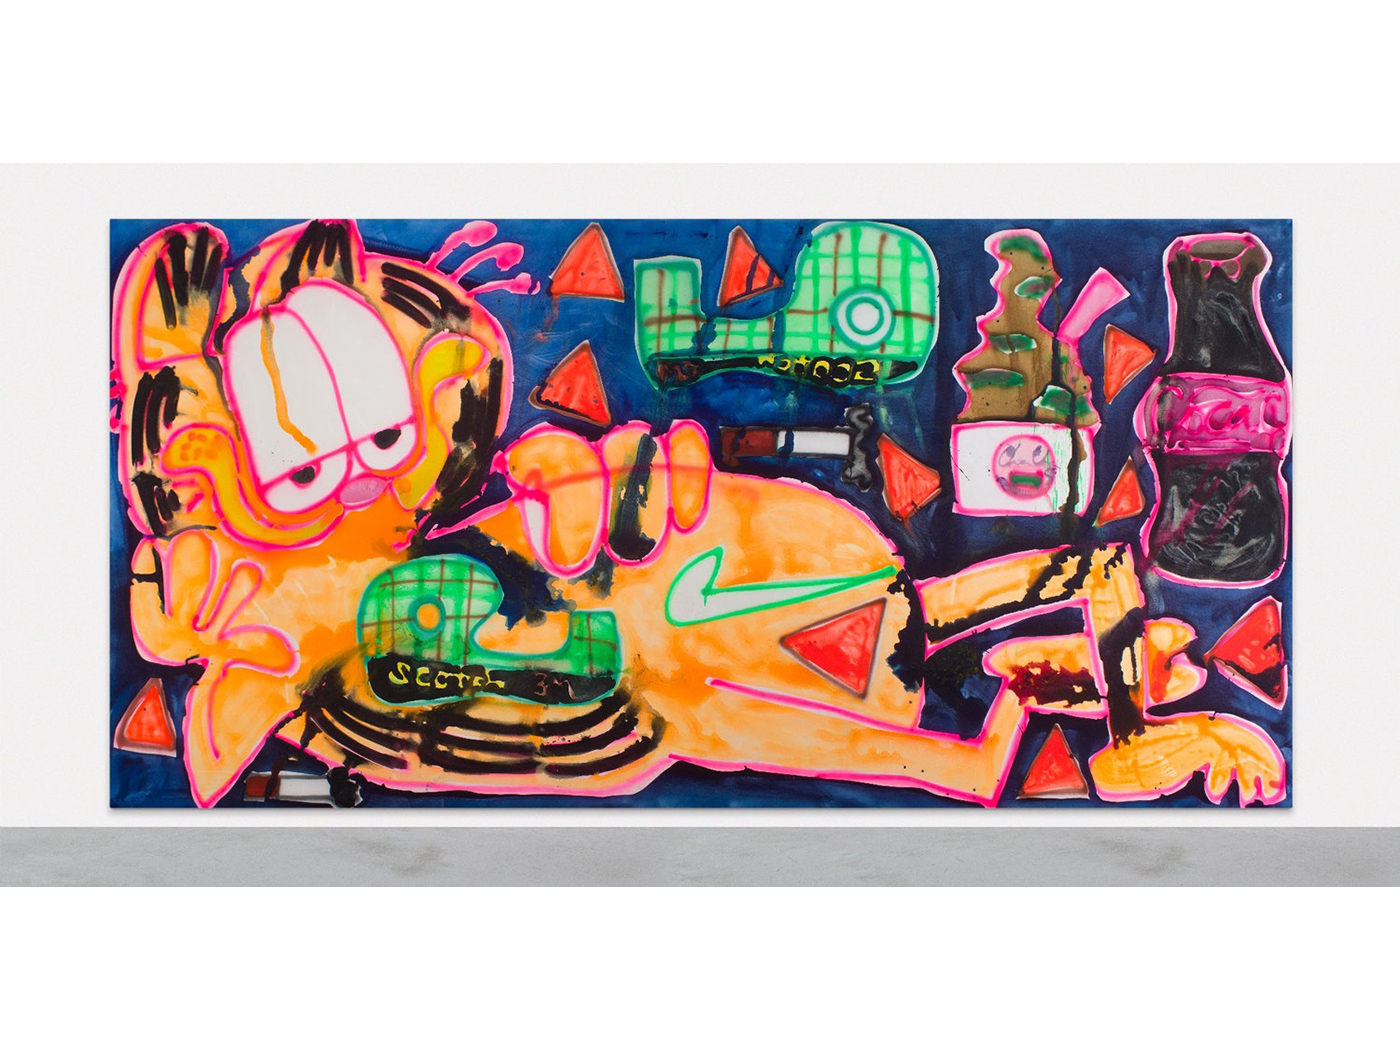 Bernhardt's monumental 3×6 metre canvas entitled 'Garfield on Scotch Tape' (2018) - installation view, 'Garfield on Scotch Tape' at Xavia Hufkins, Belgium, 2019.